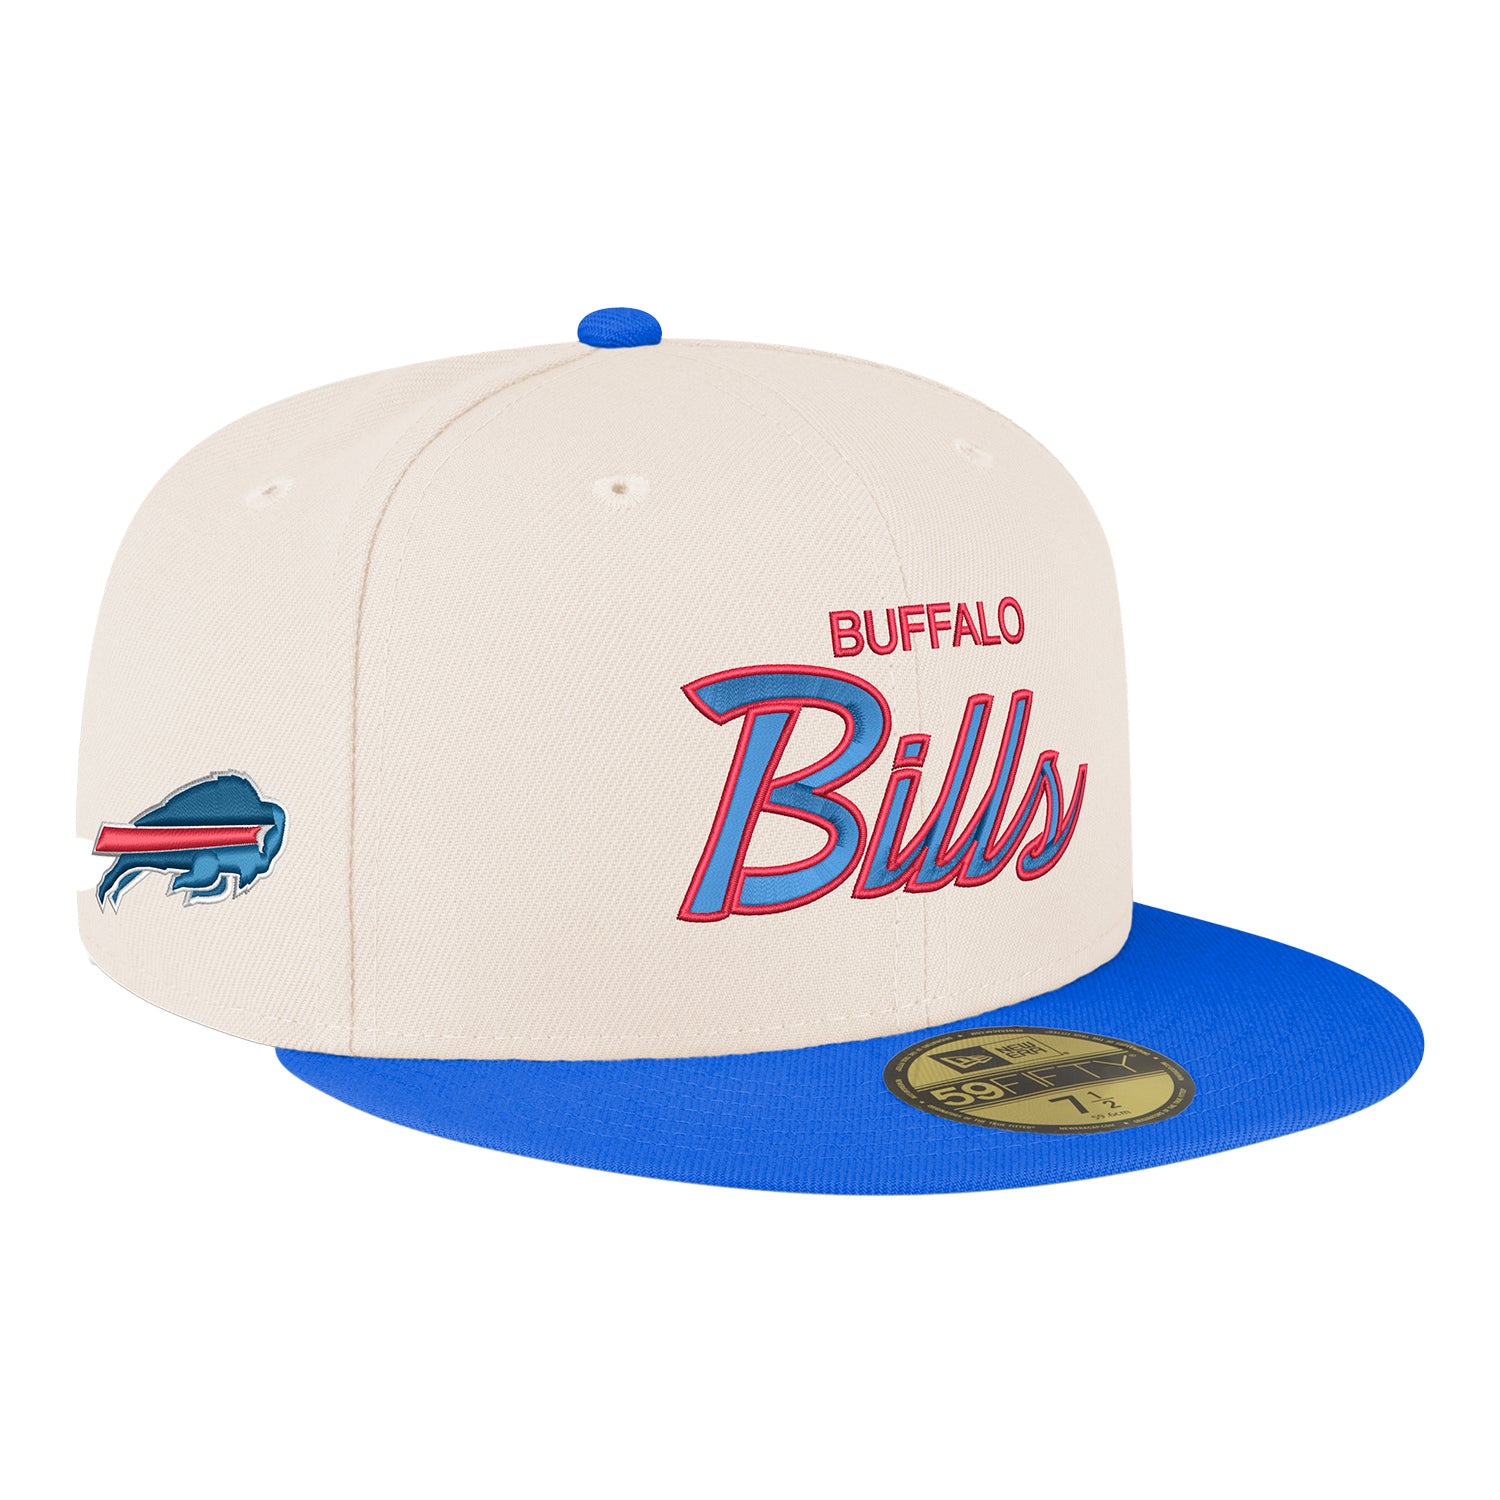 New Era Buffalo Bills 59FIFTY Chrome Script Fitted Hat